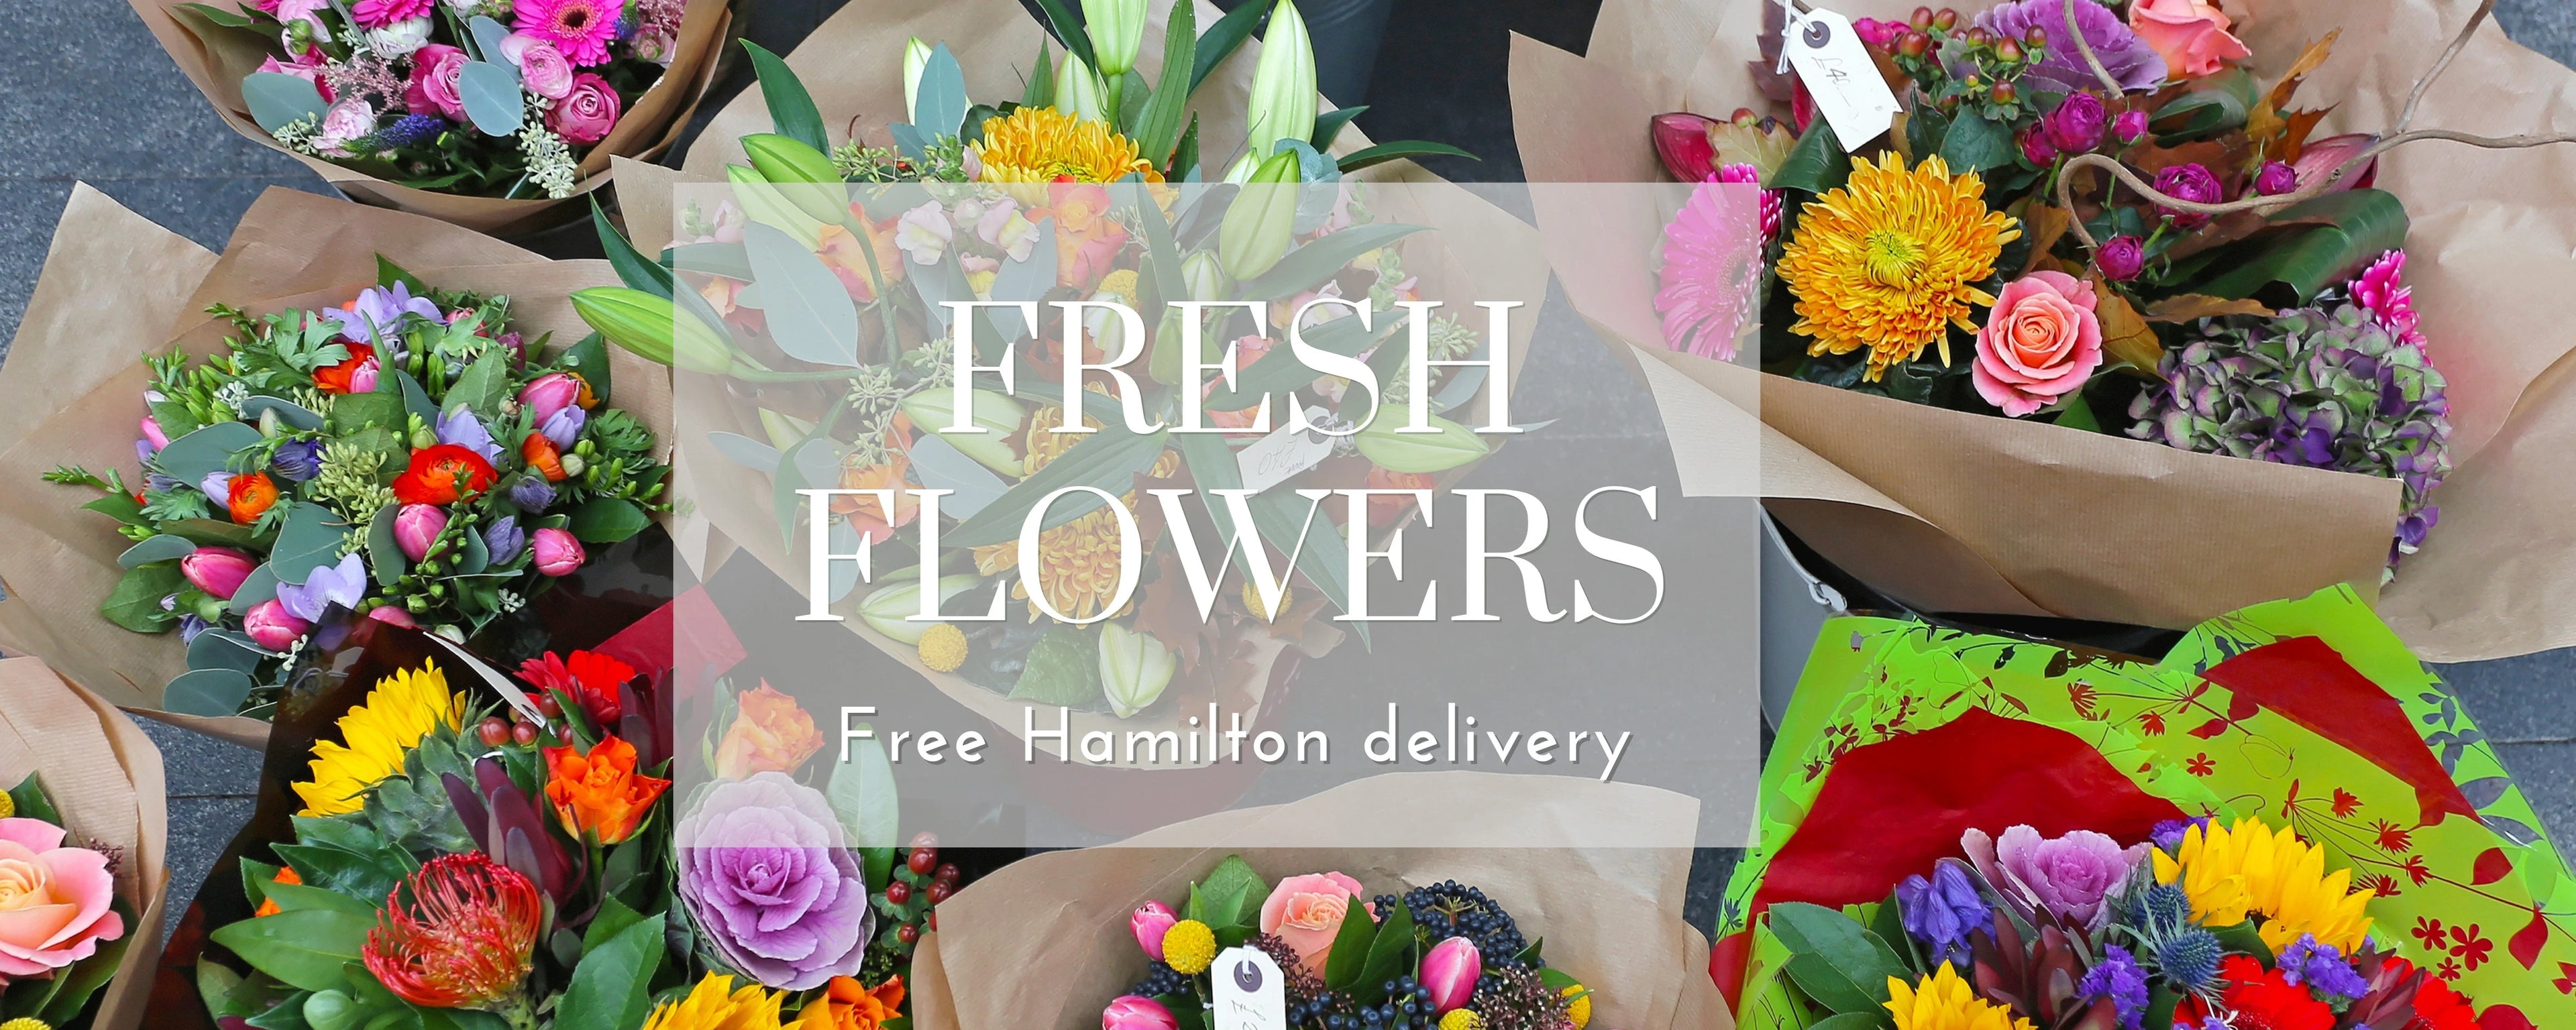 Hamilton Florist - Flower Delivery by Gray The Florist, Inc.